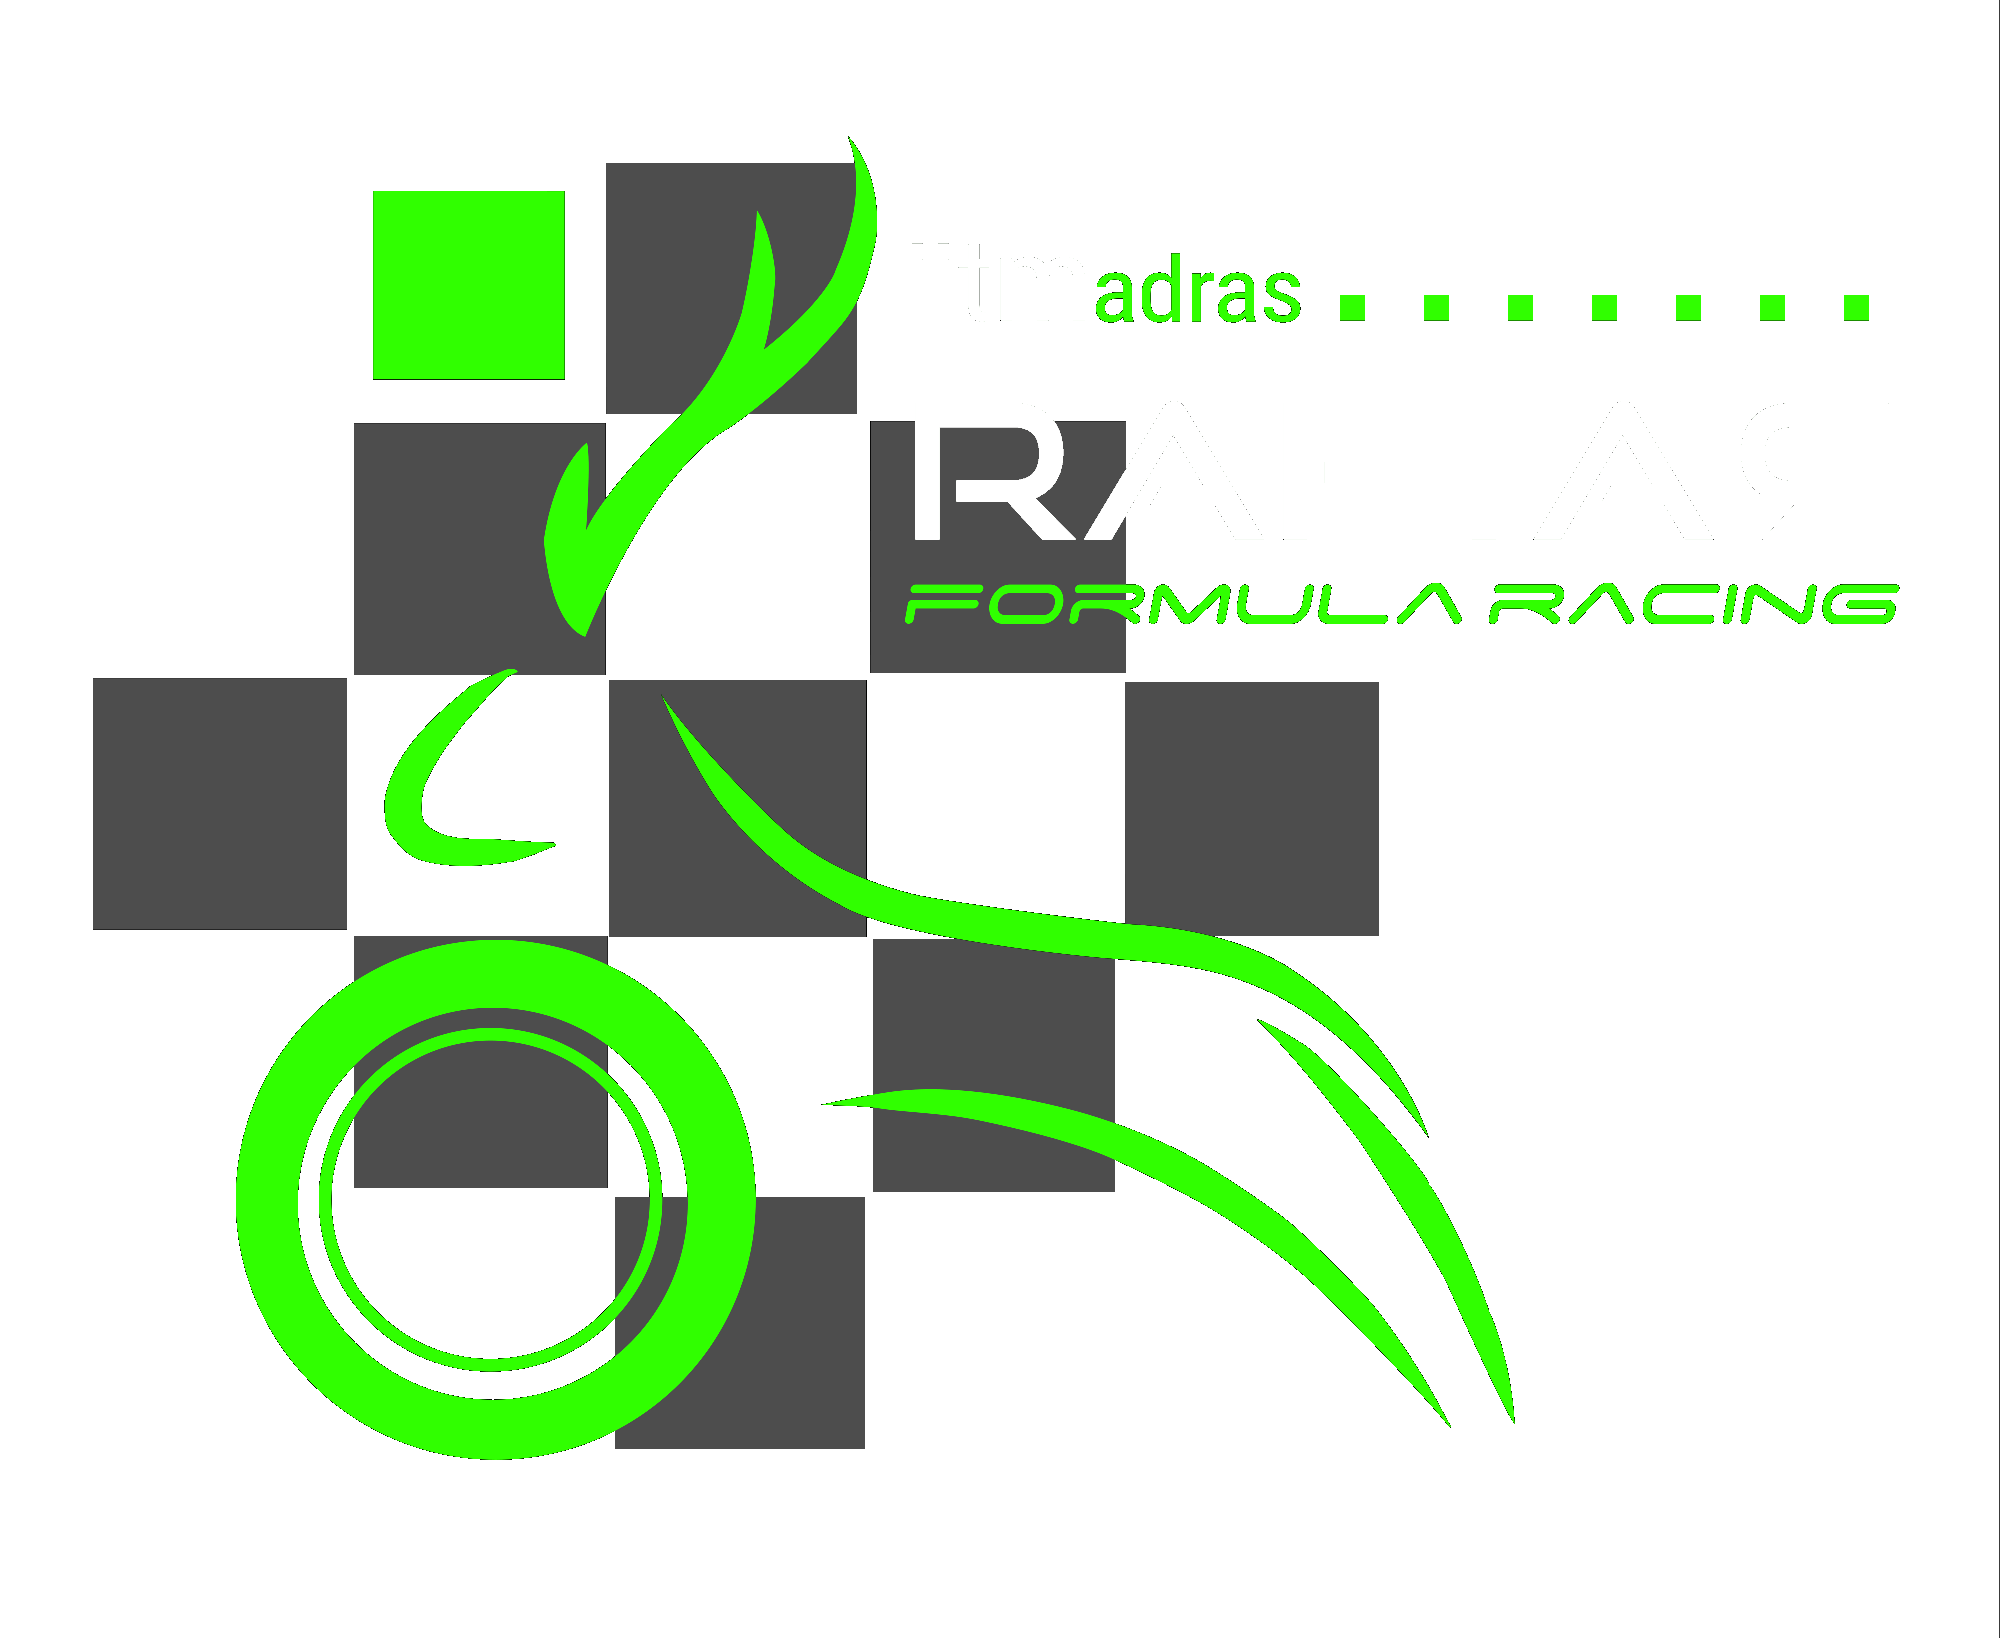 raftar formula racing logo